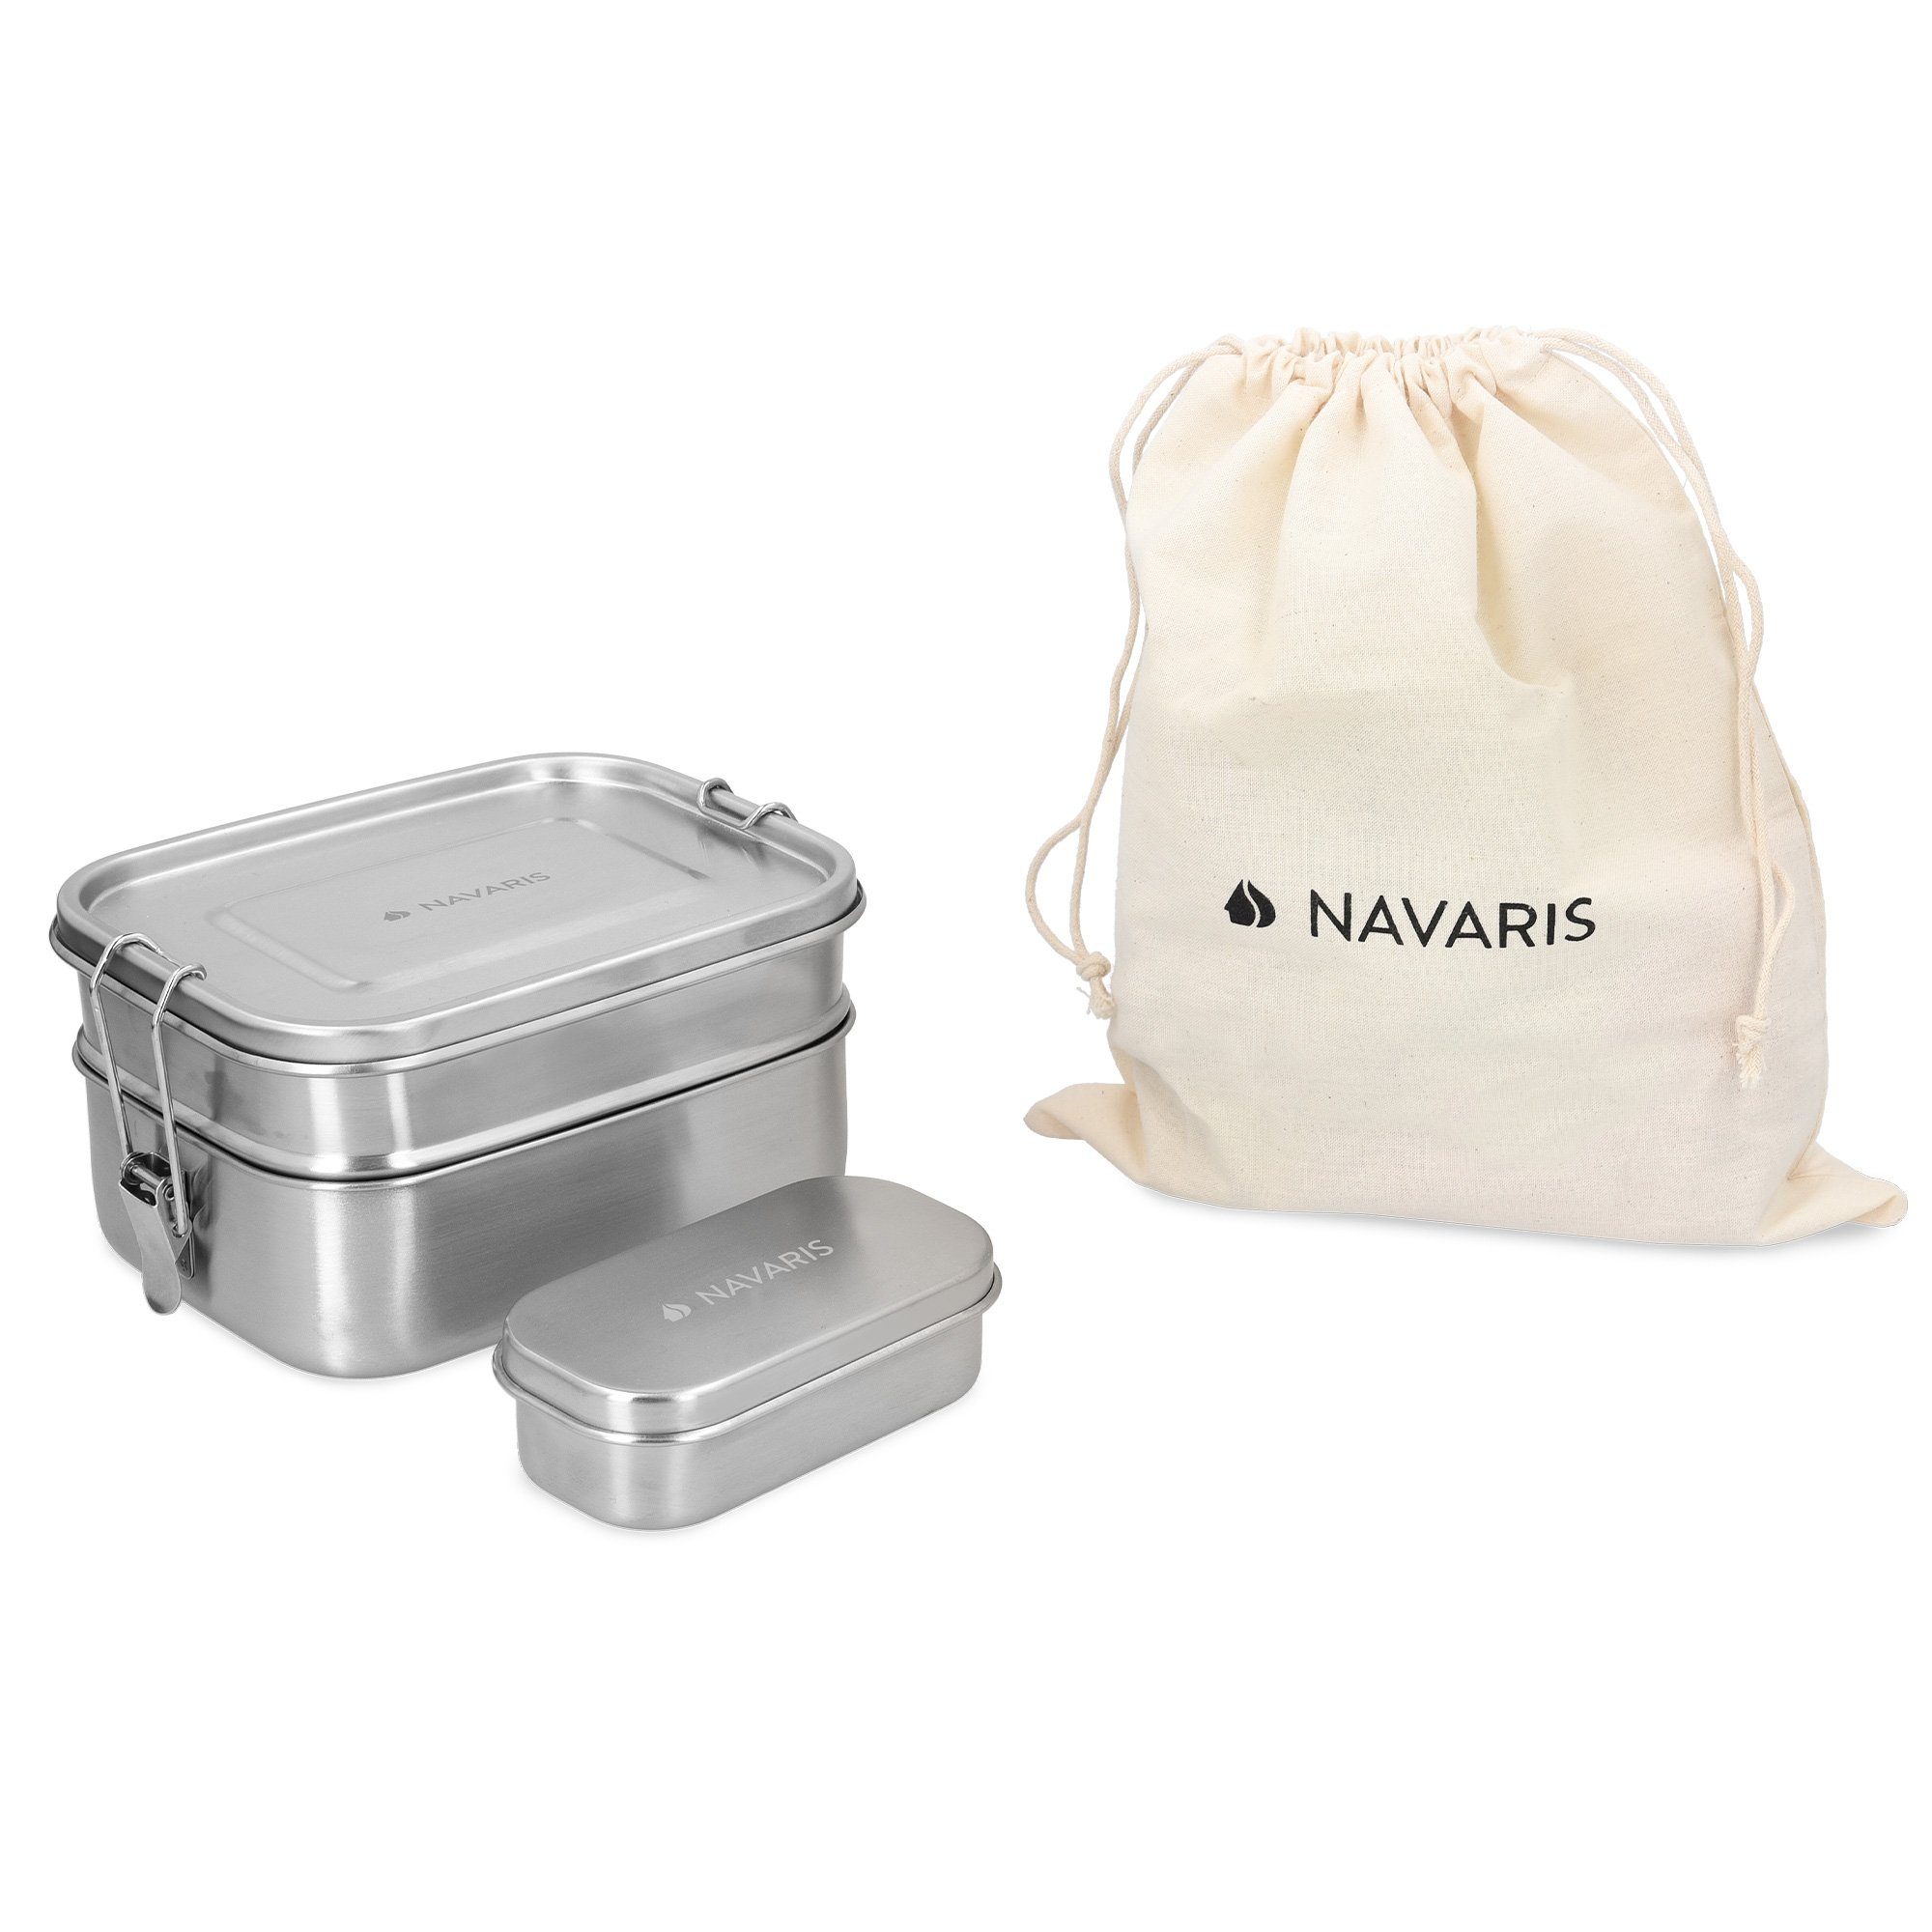 Navaris Lunchbox Doppeldecker Edelstahl Brotdosen Set inkl. Mini Behälter, Edelstahl